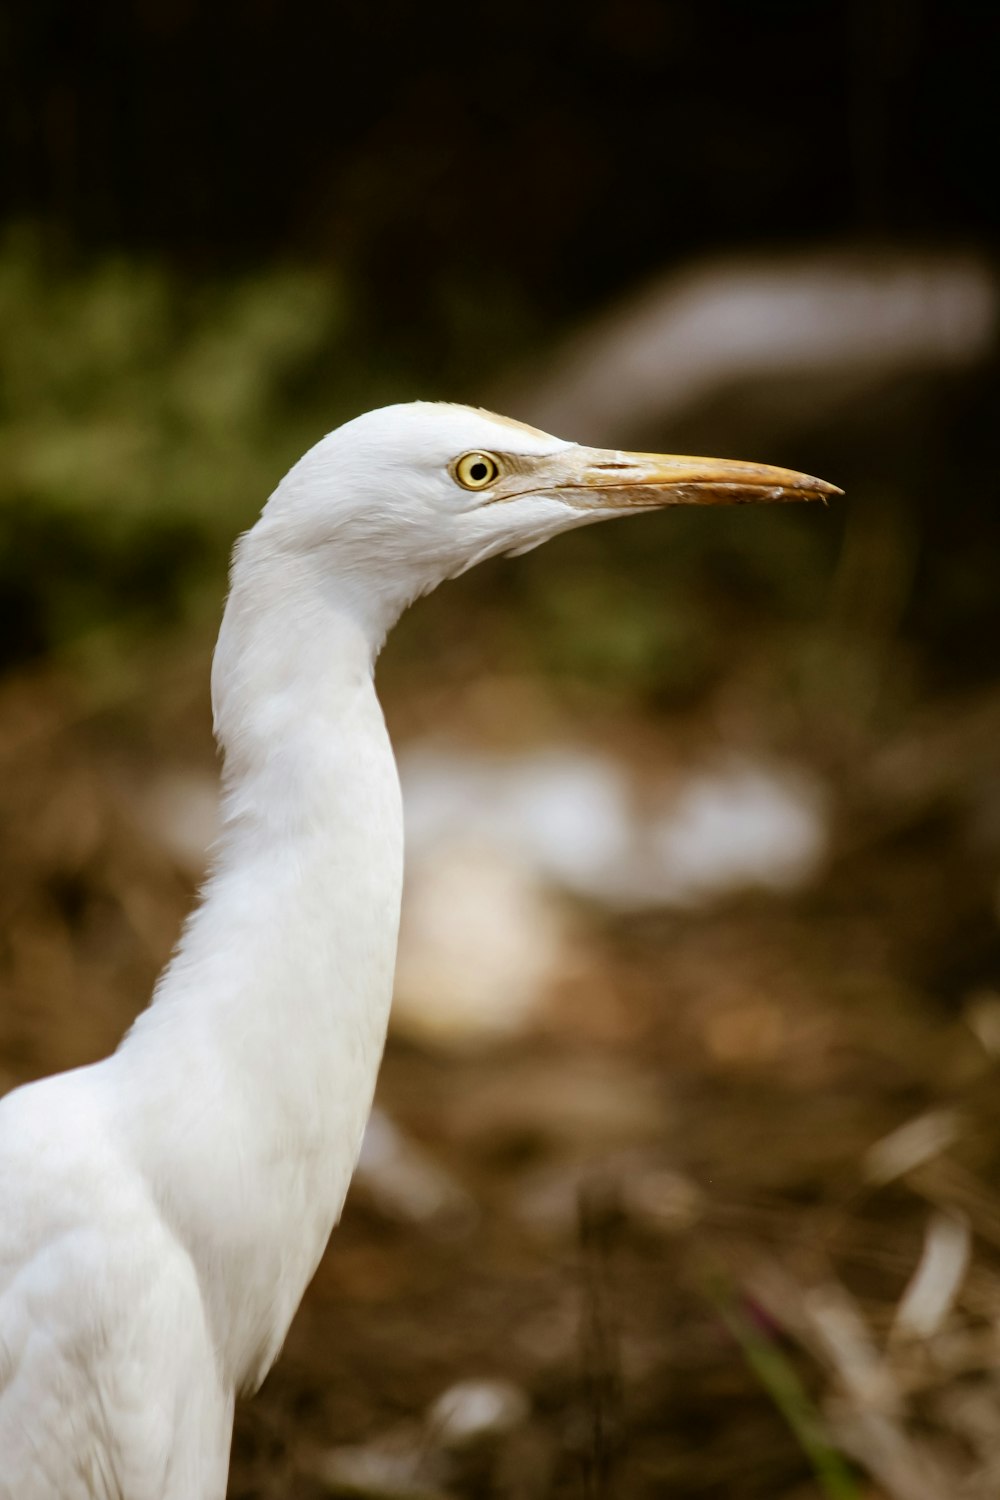 white long beak bird in close up photography